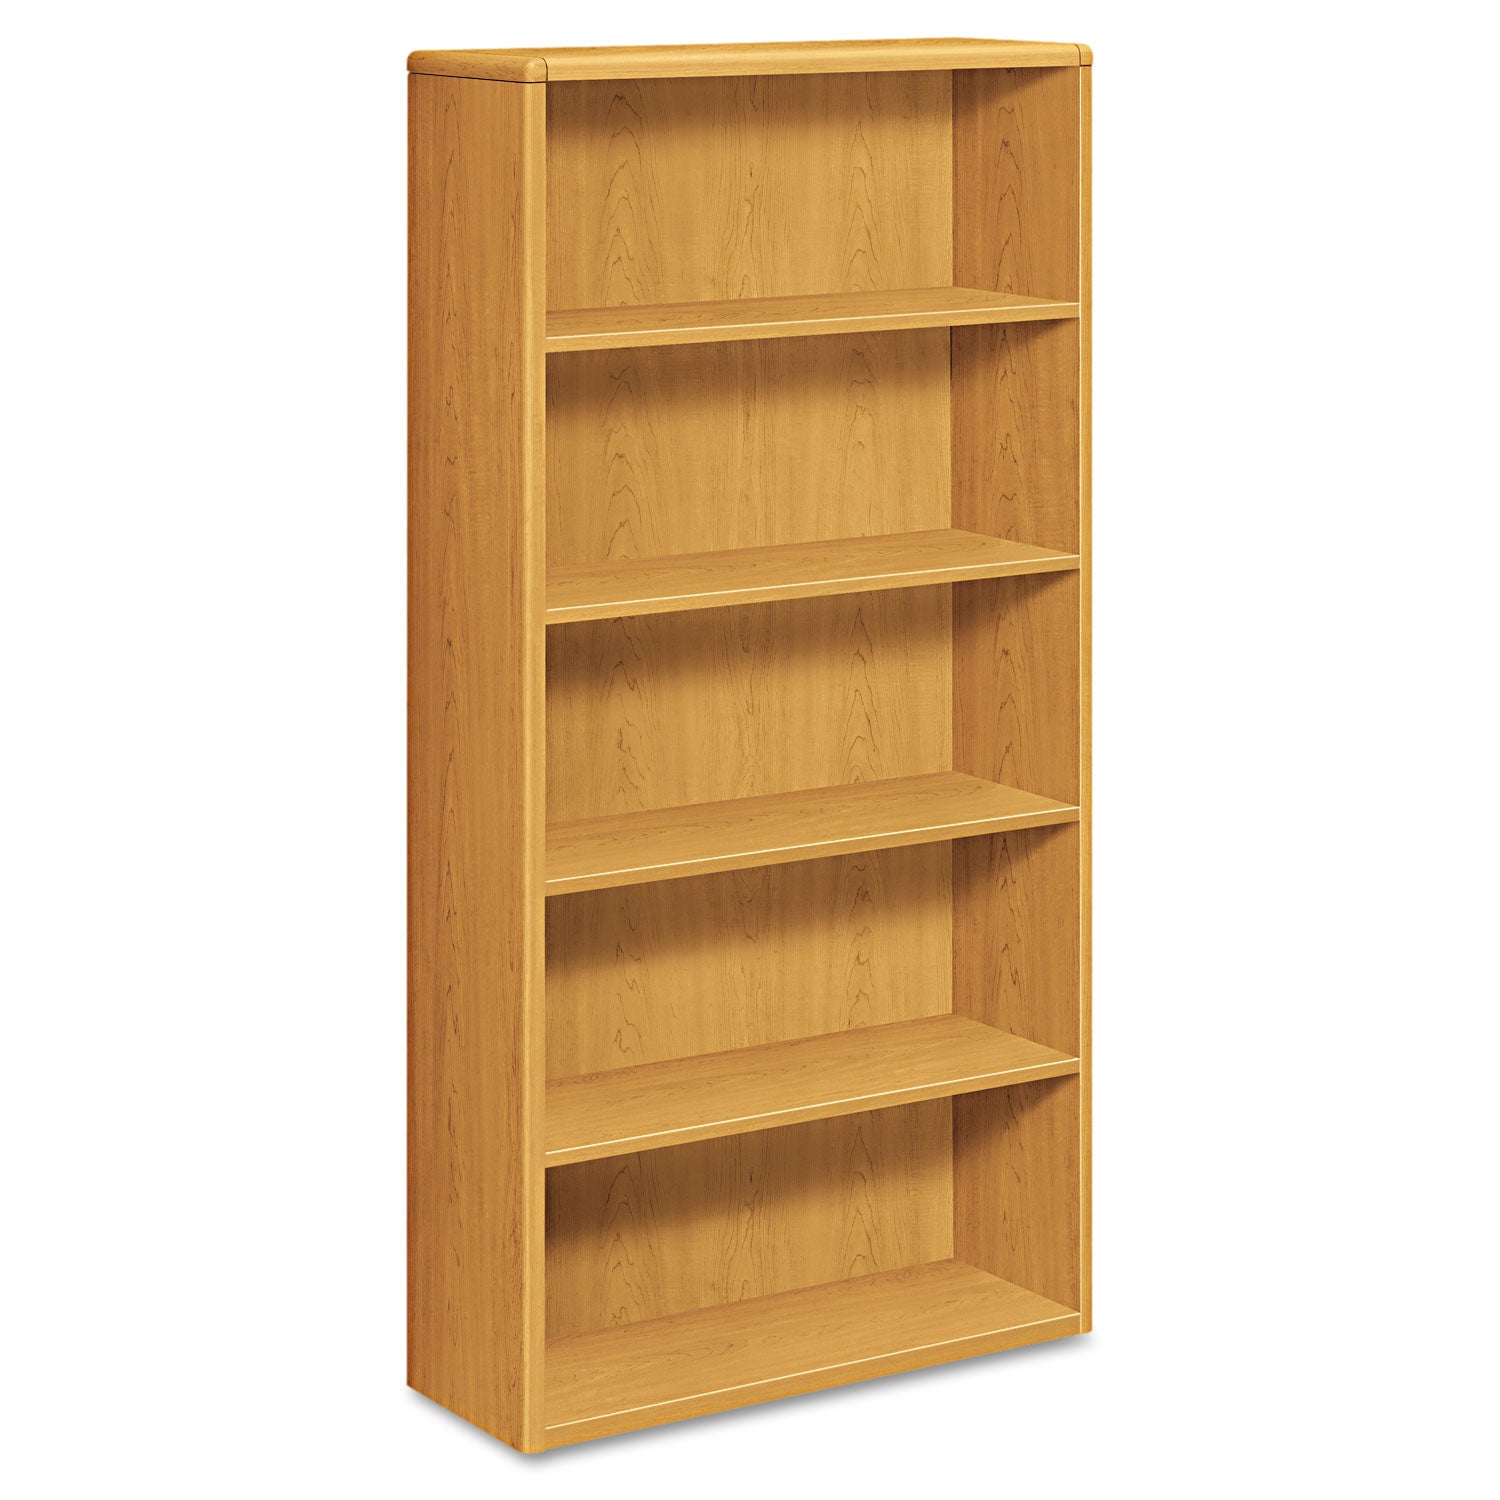 10700 Series Wood Bookcase, Five-Shelf, 36w x 13.13d x 71h, Harvest - 